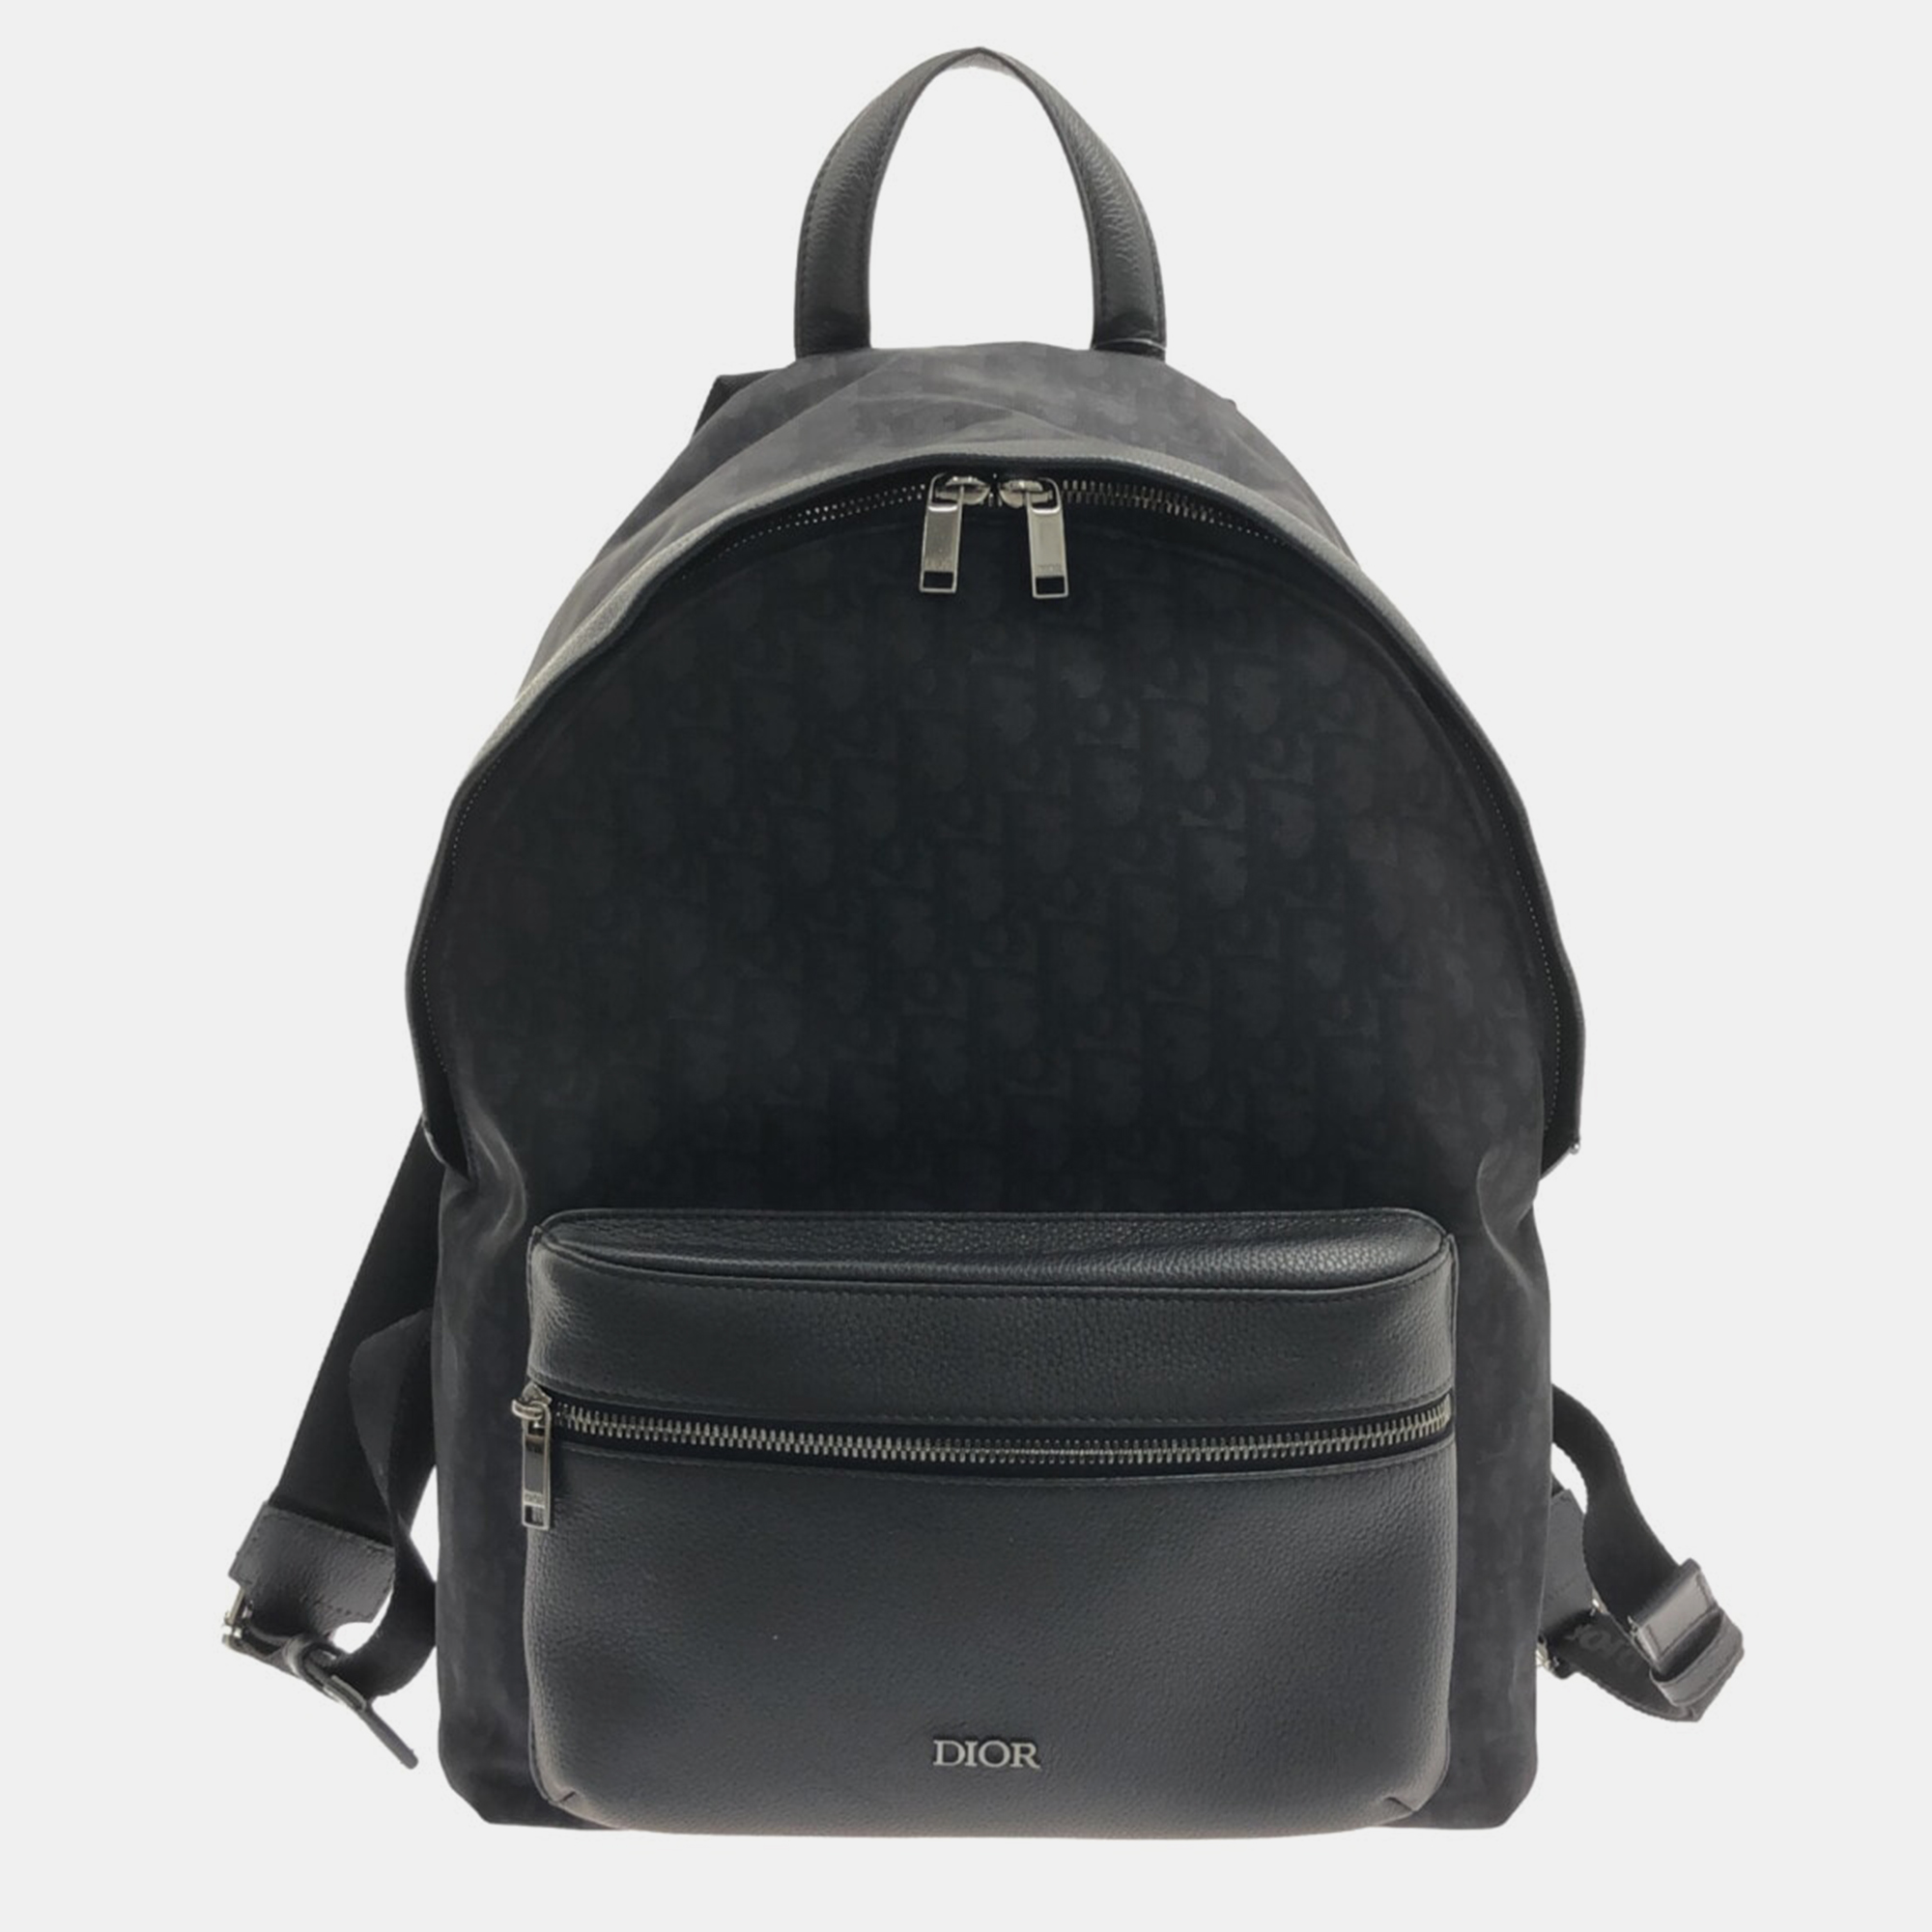 Dior Black Nylon Backpack